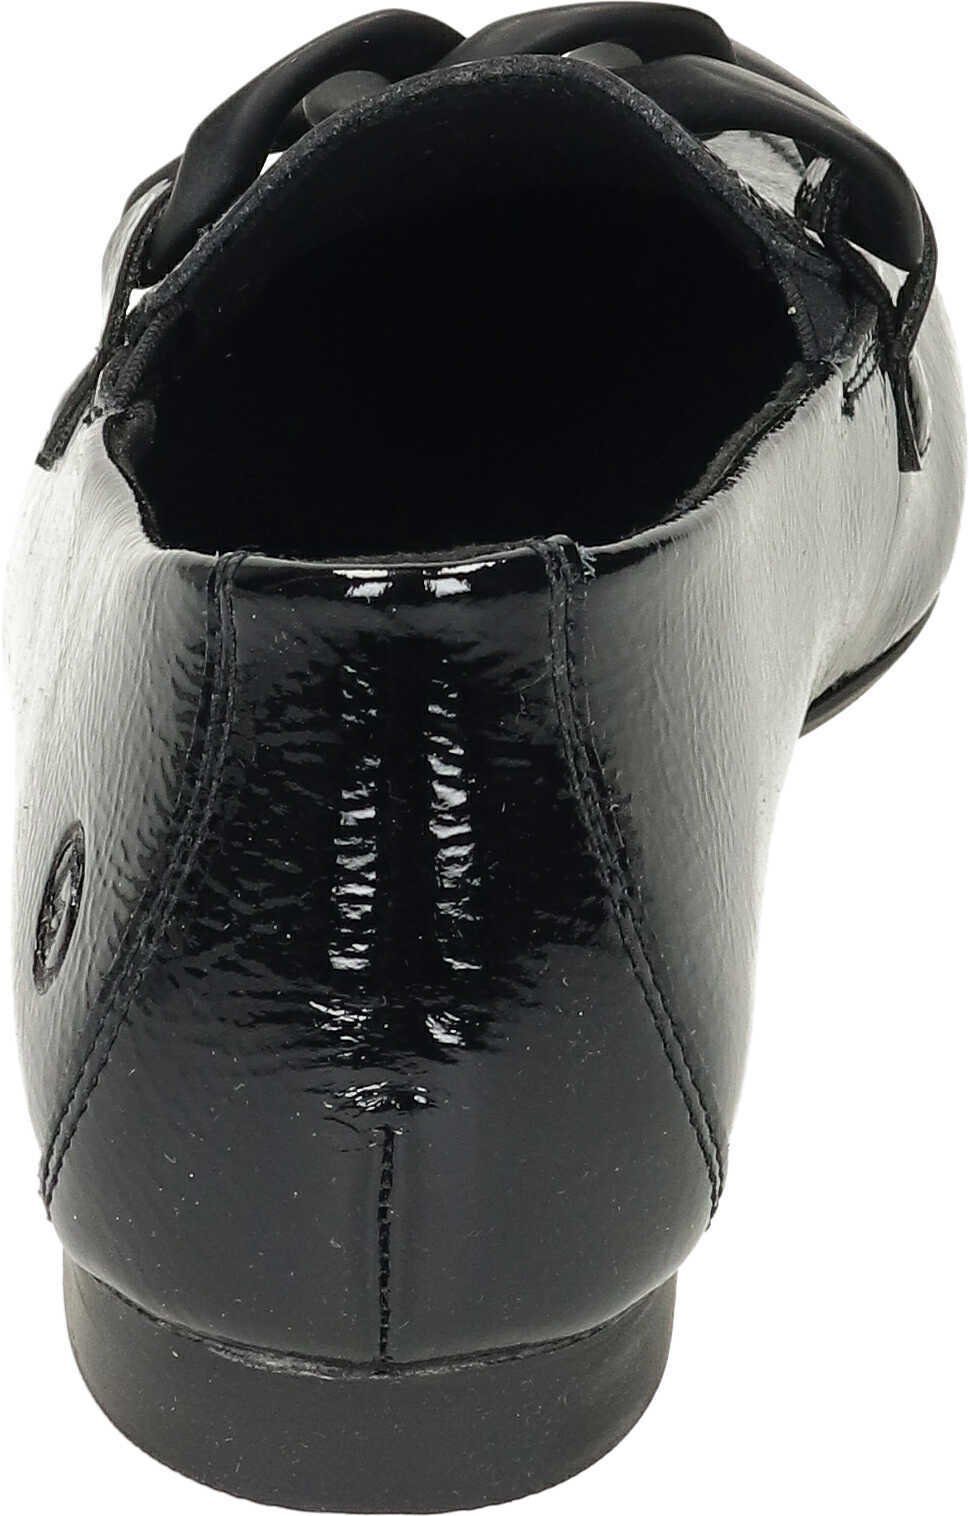 schwarz Slipper Remonte Loafer Lackleder aus